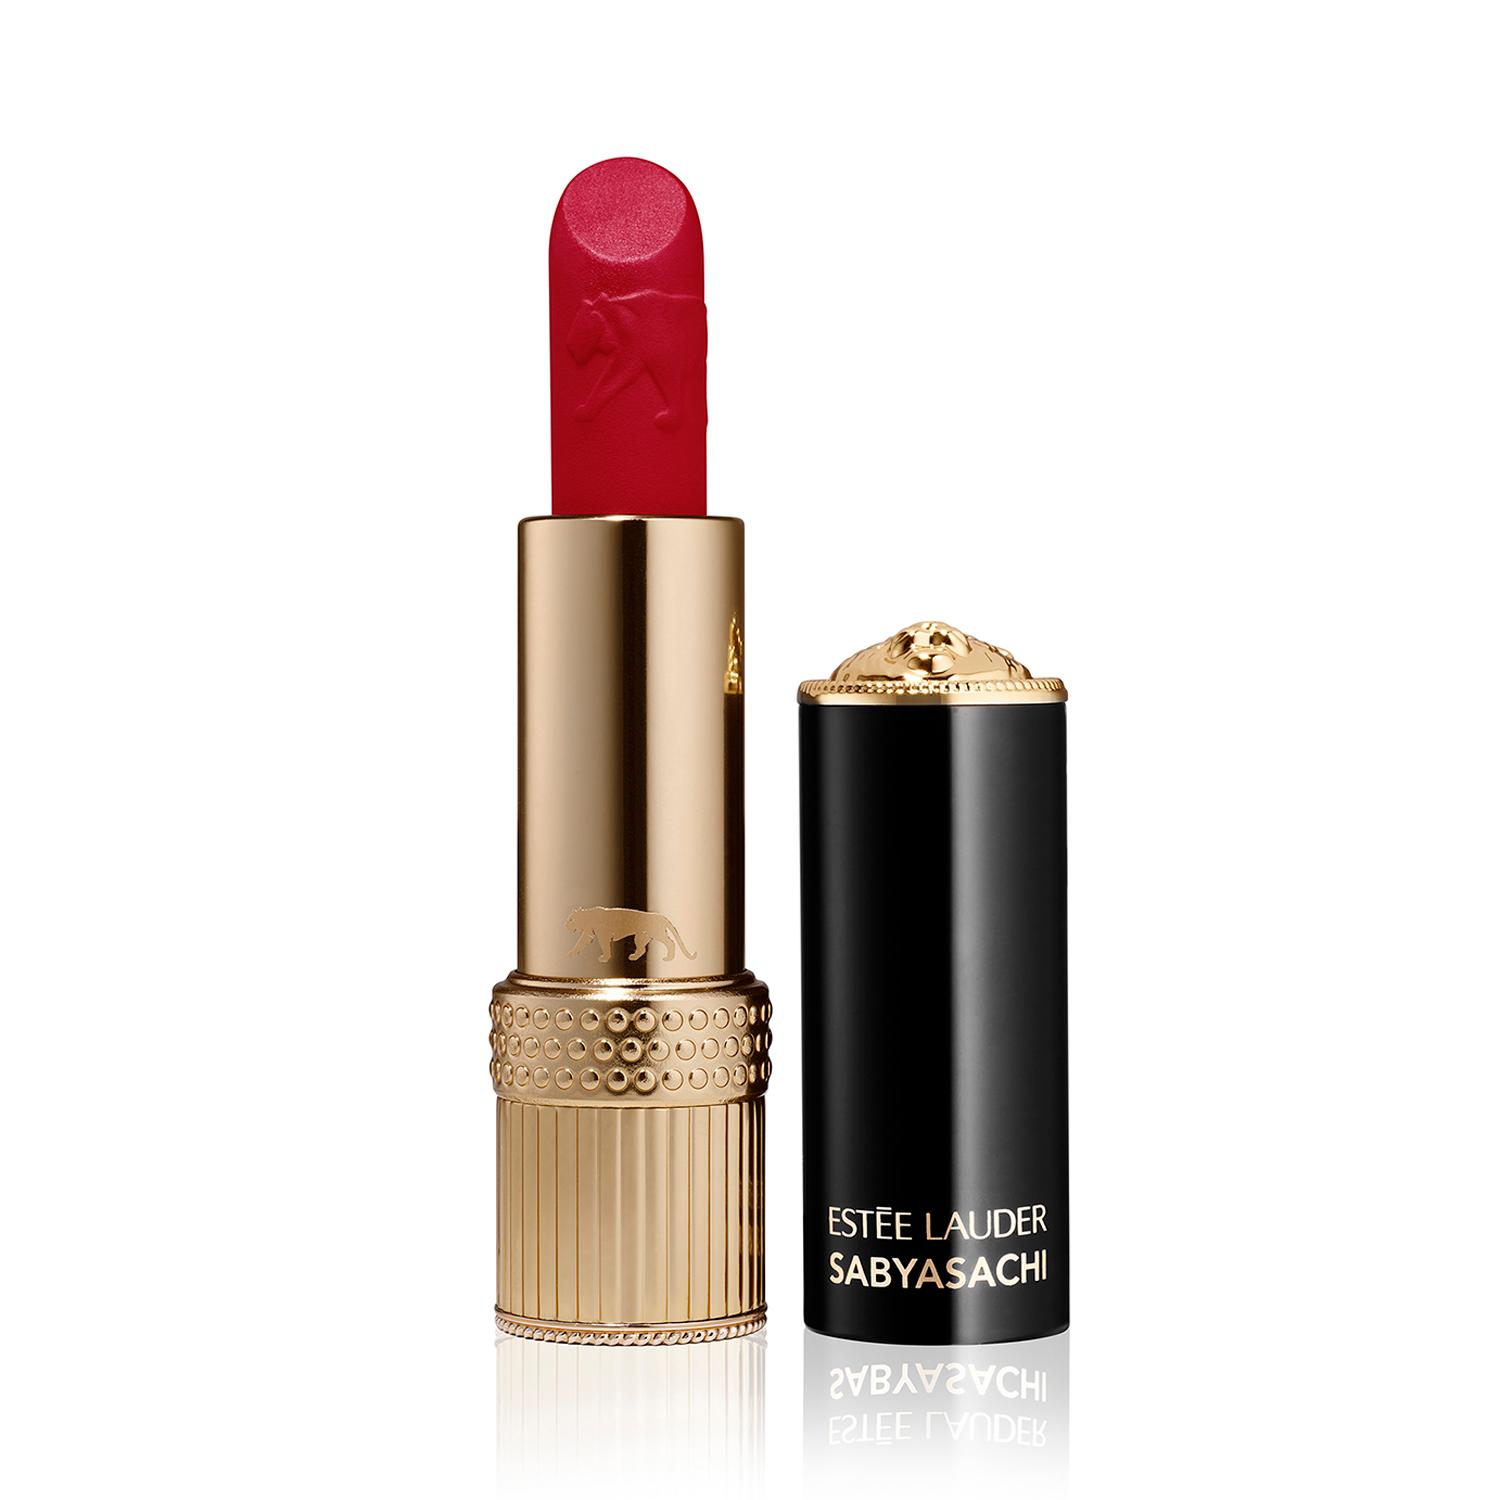 Estee Lauder Sabyasachi Limited Edition Lipstick Collection - Calcutta Red (3.8 g)